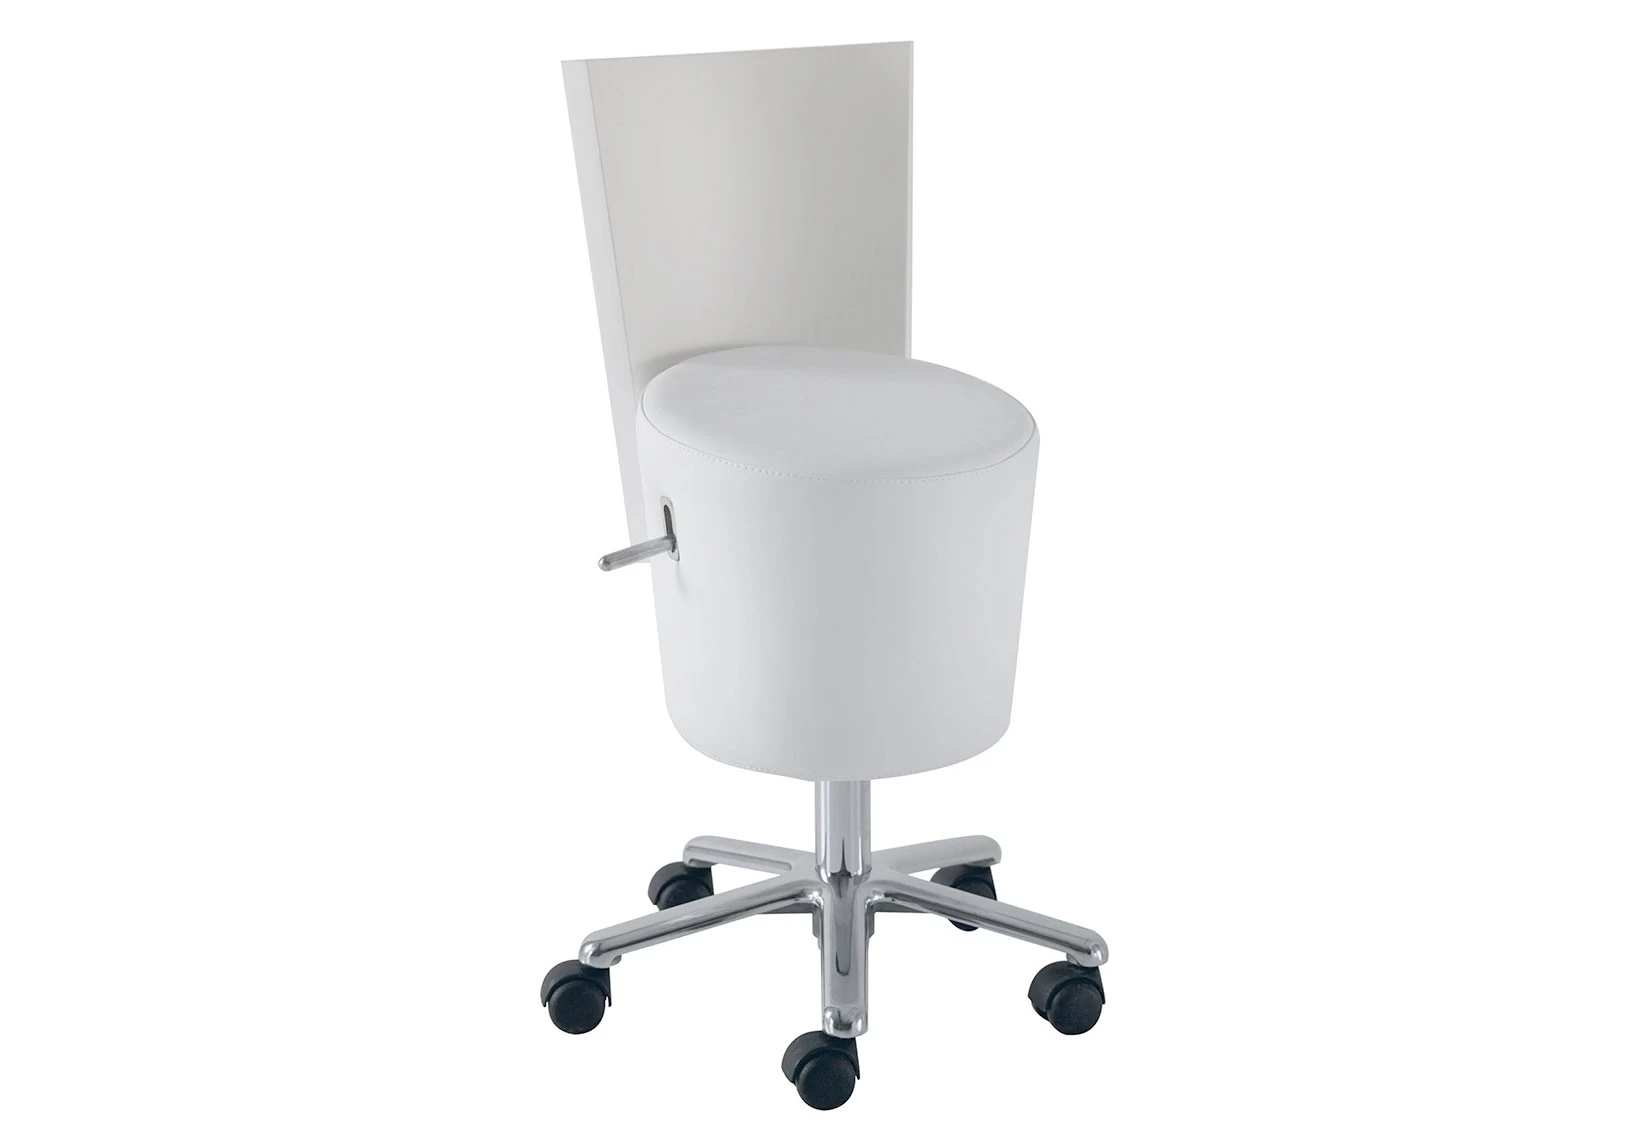 Adjutable height stylish stool with wooden backrest and chrome base Professional Salon Stool